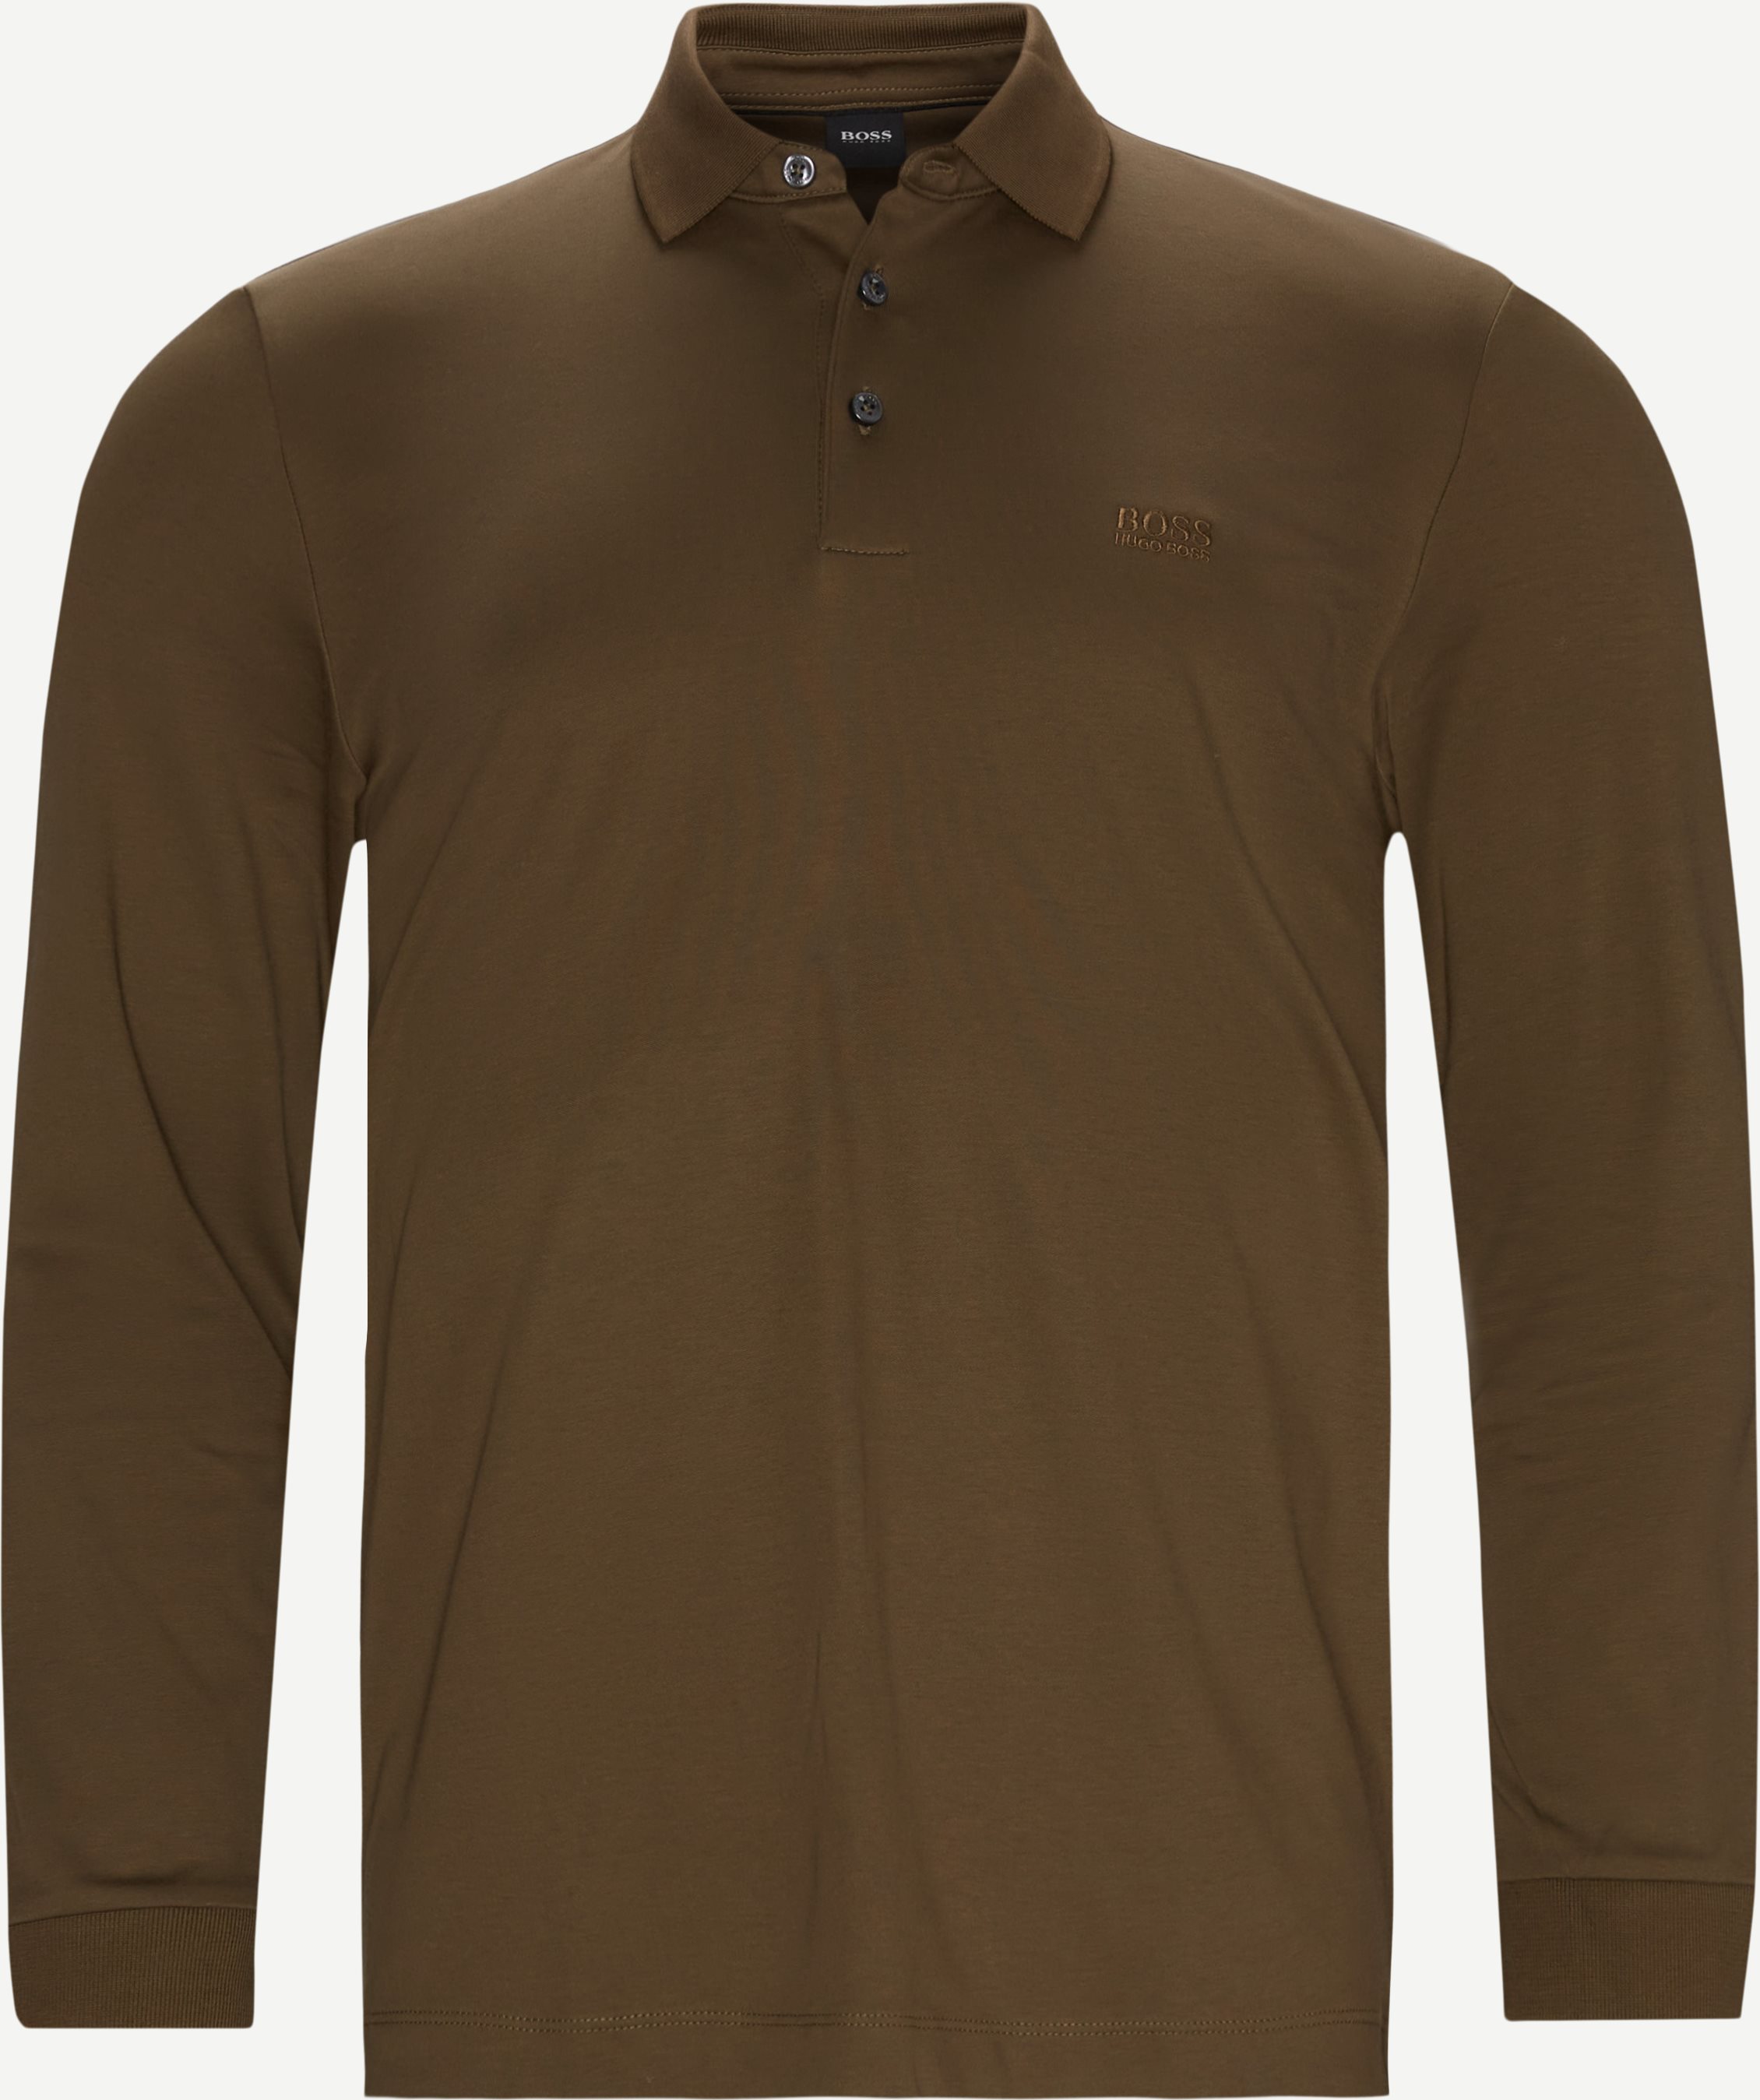 Pado11 Long Sleeve Polo - T-shirts - Regular fit - Army